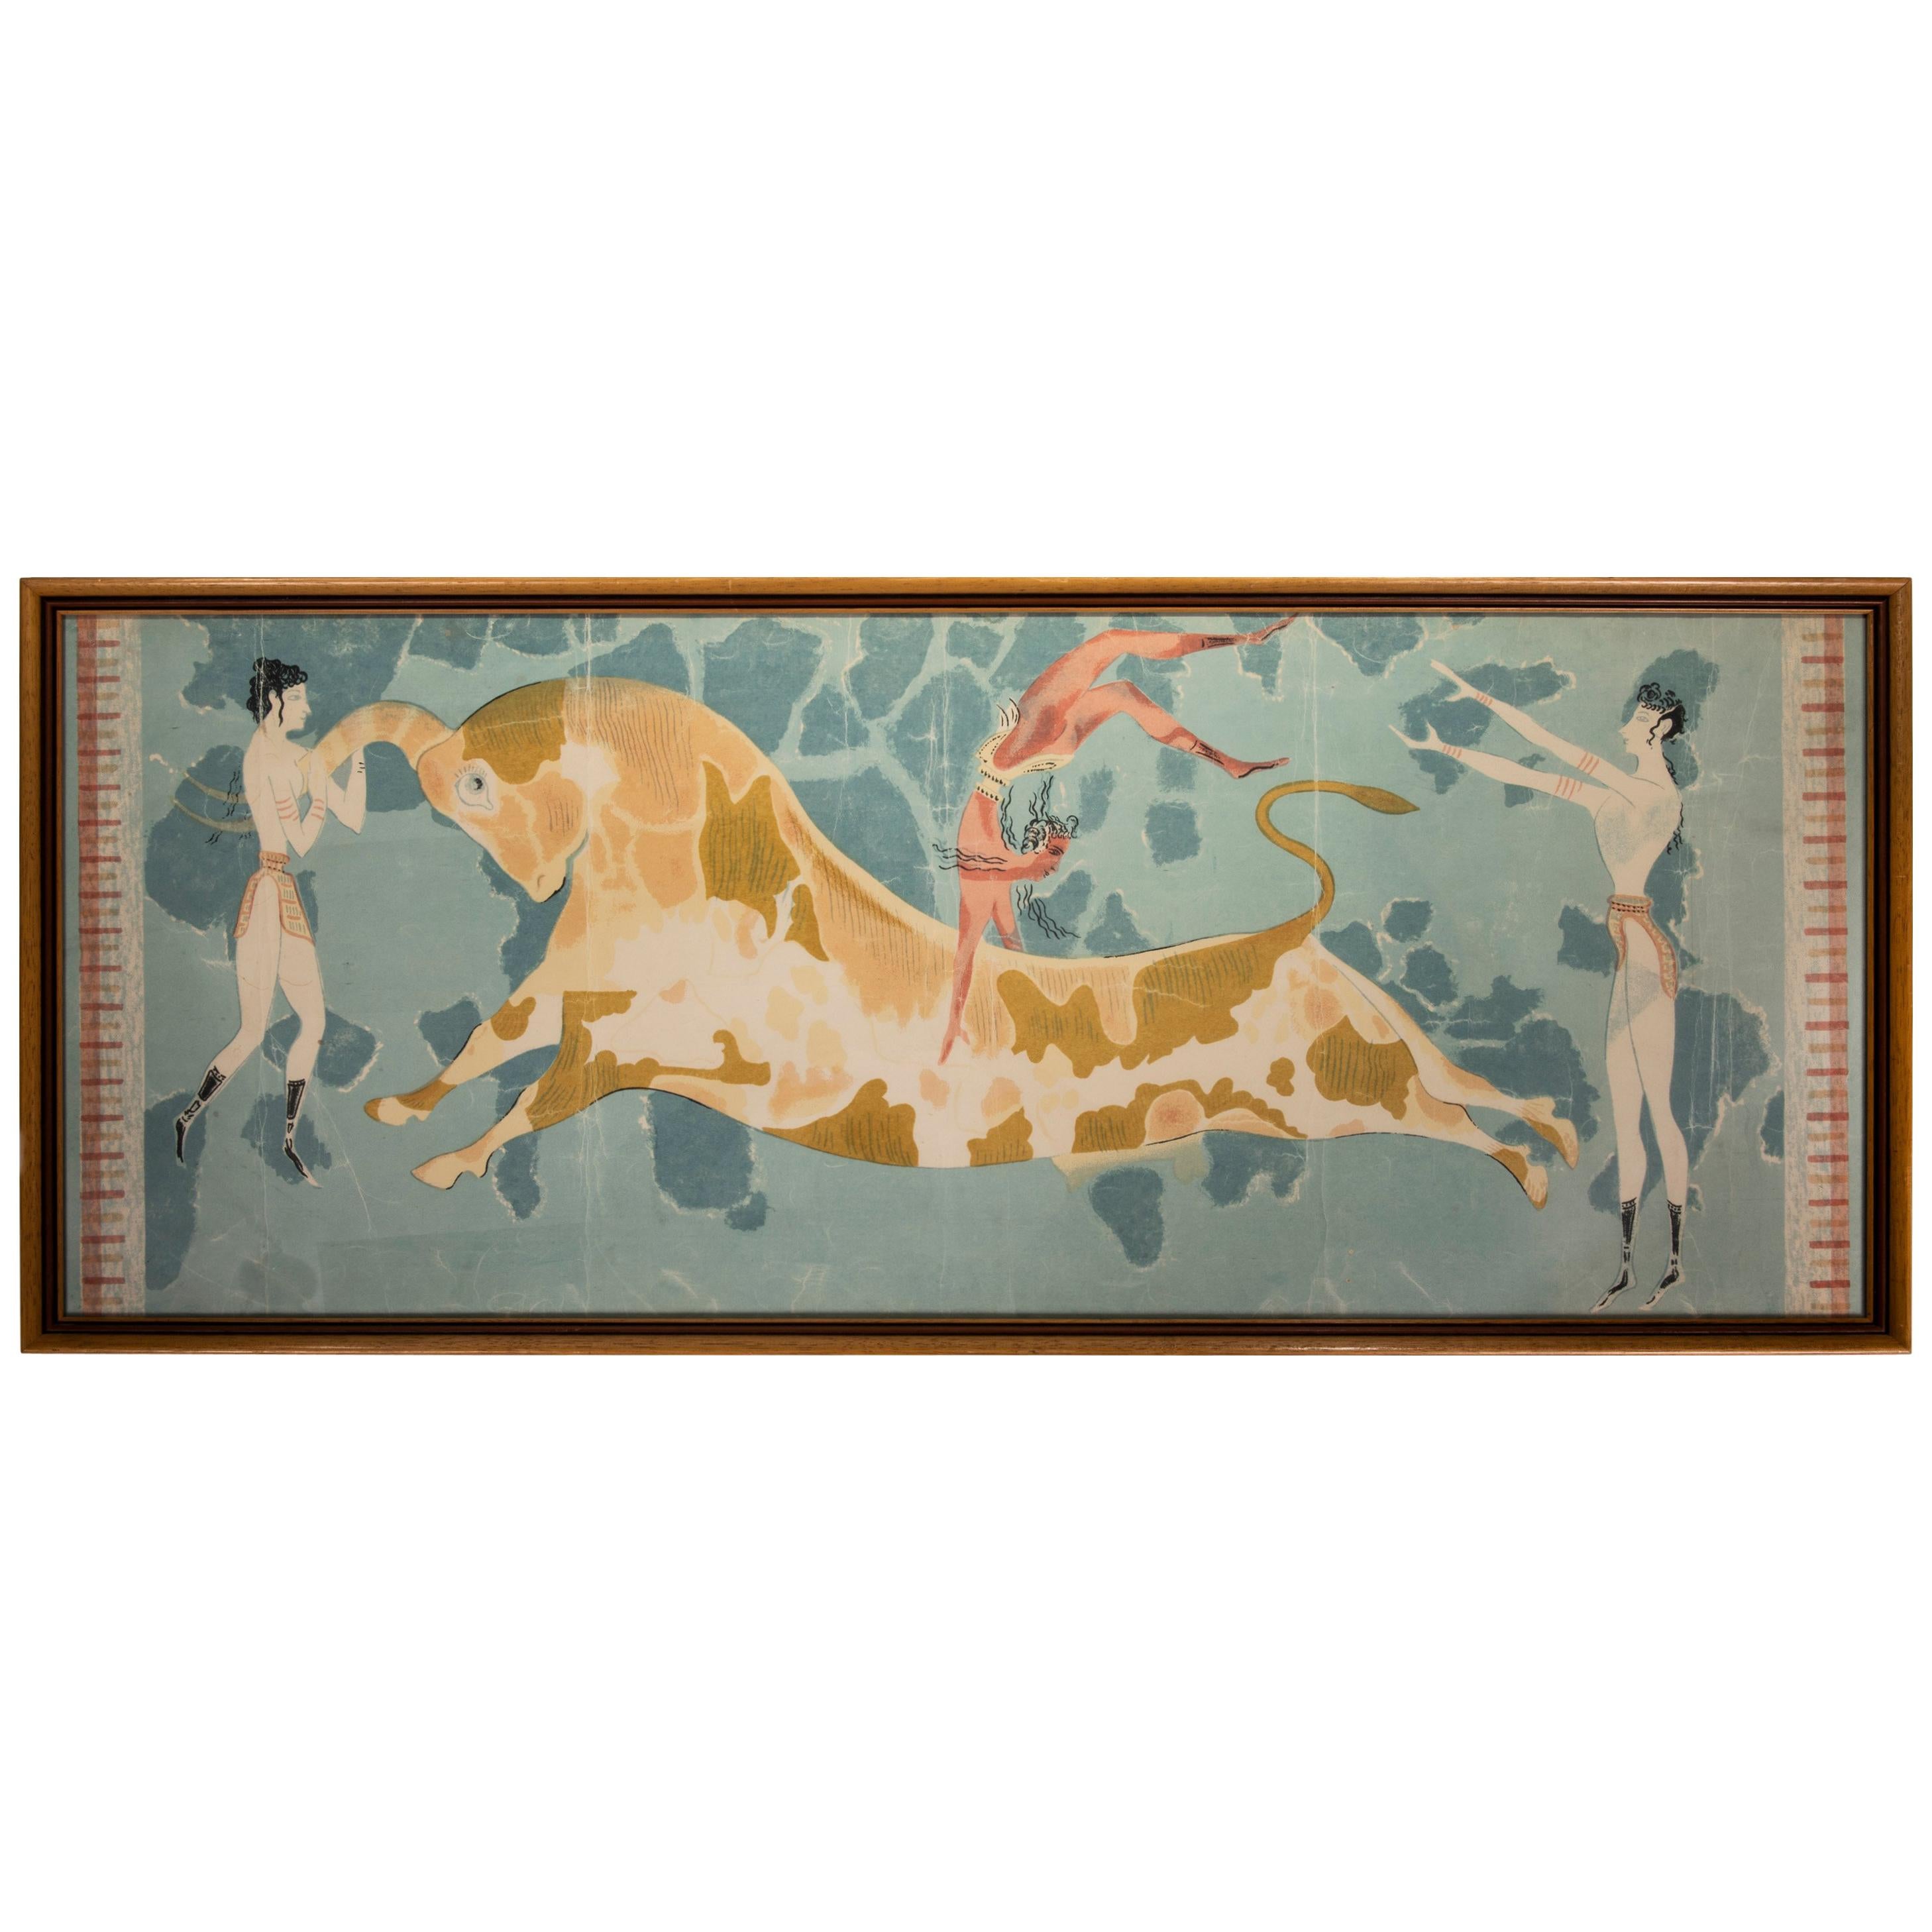 Vintage Minoan "Bull Leaping" Illustrated Print in Original Wood Frame